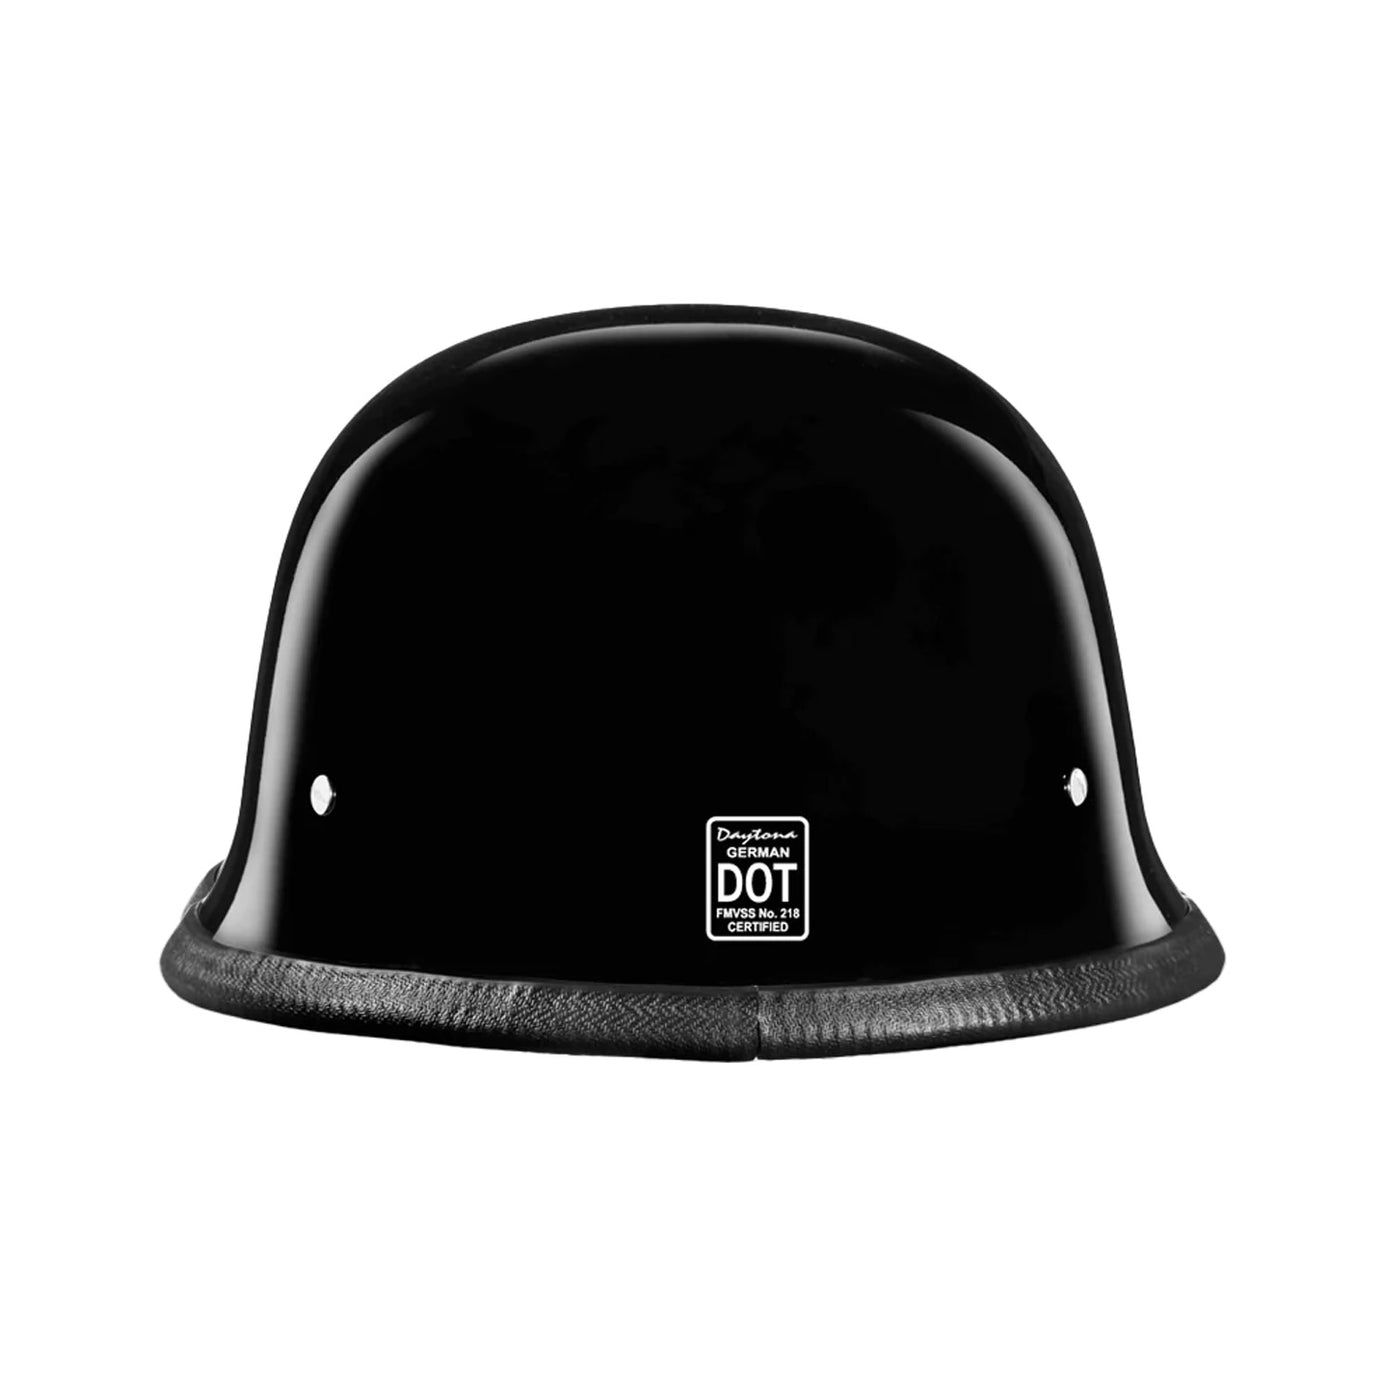 Daytona Helmets D.O.T. German Helmet